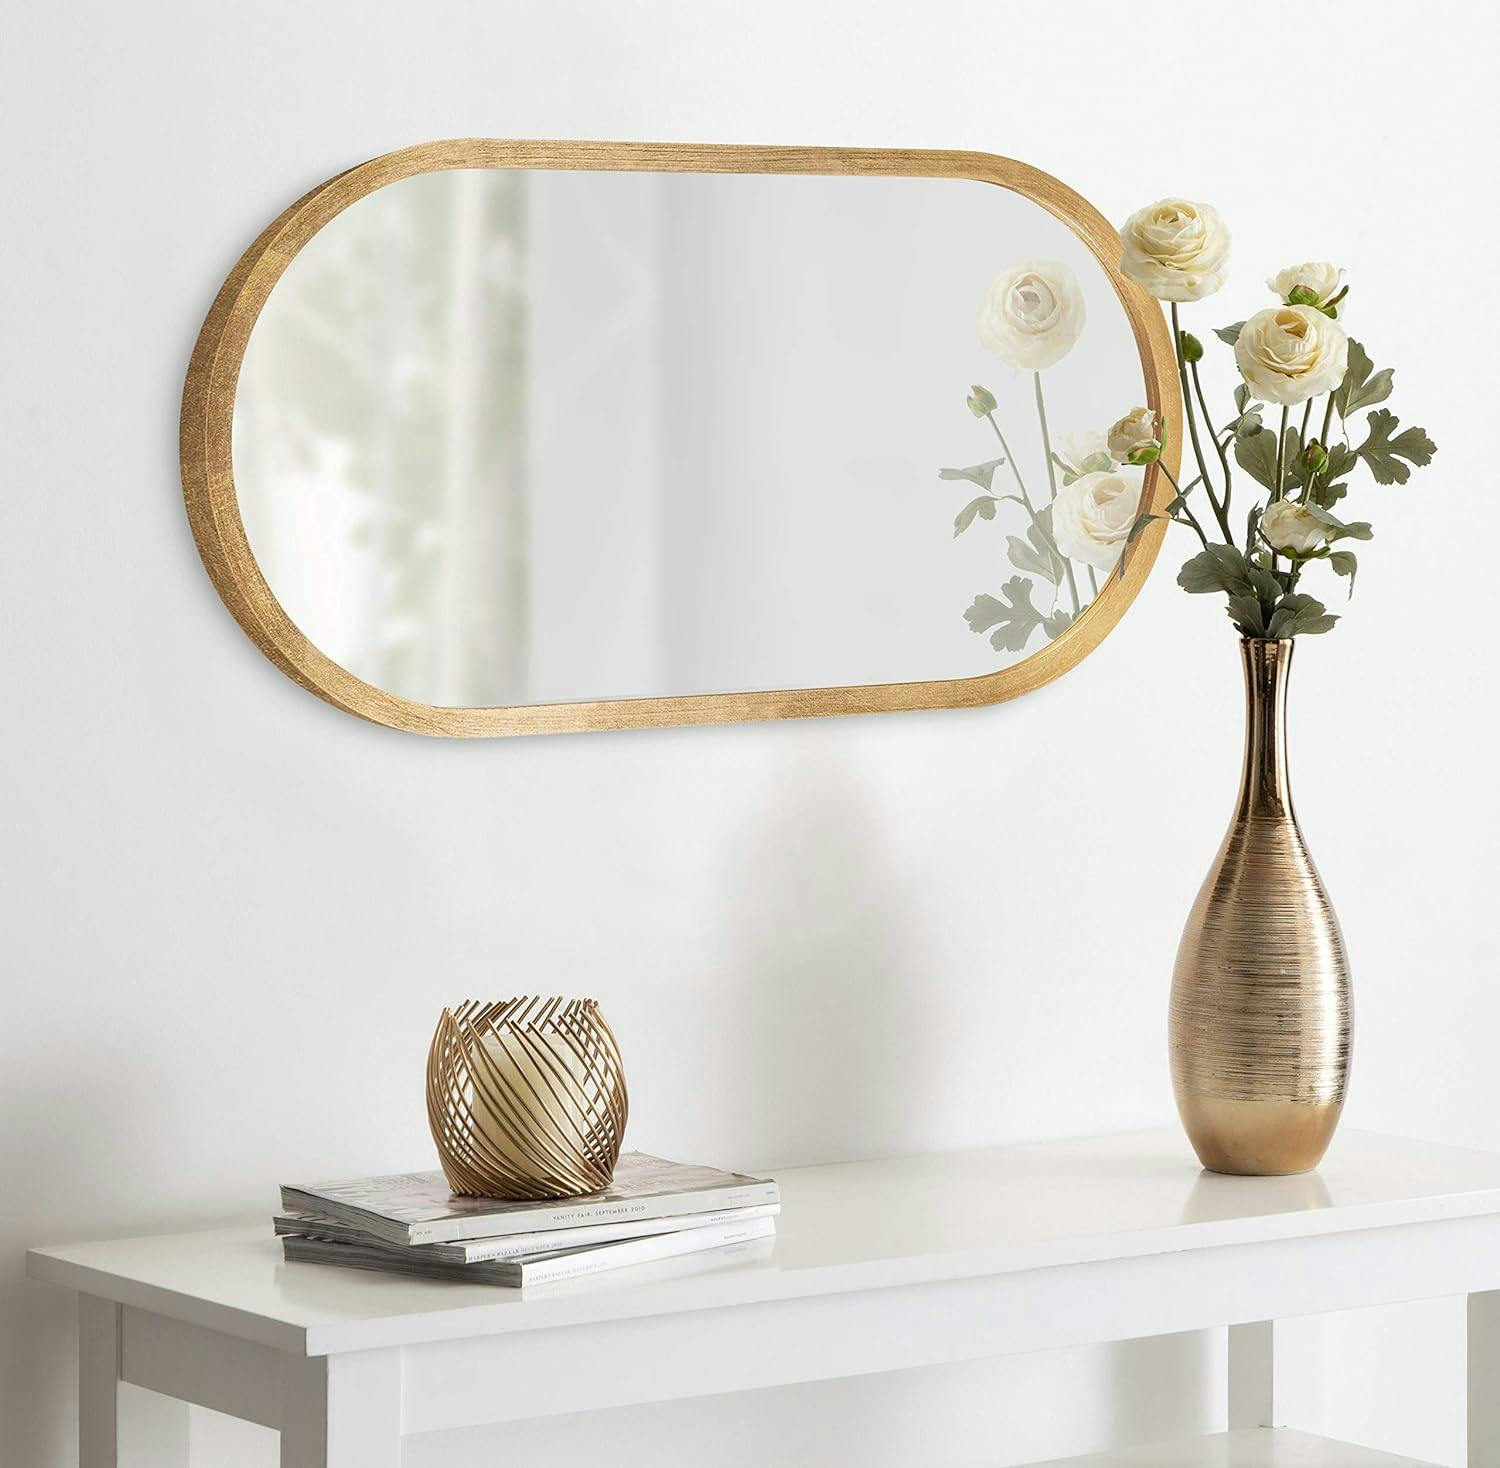 Travis Capsule Framed Full-Length Wood Mirror in Gold